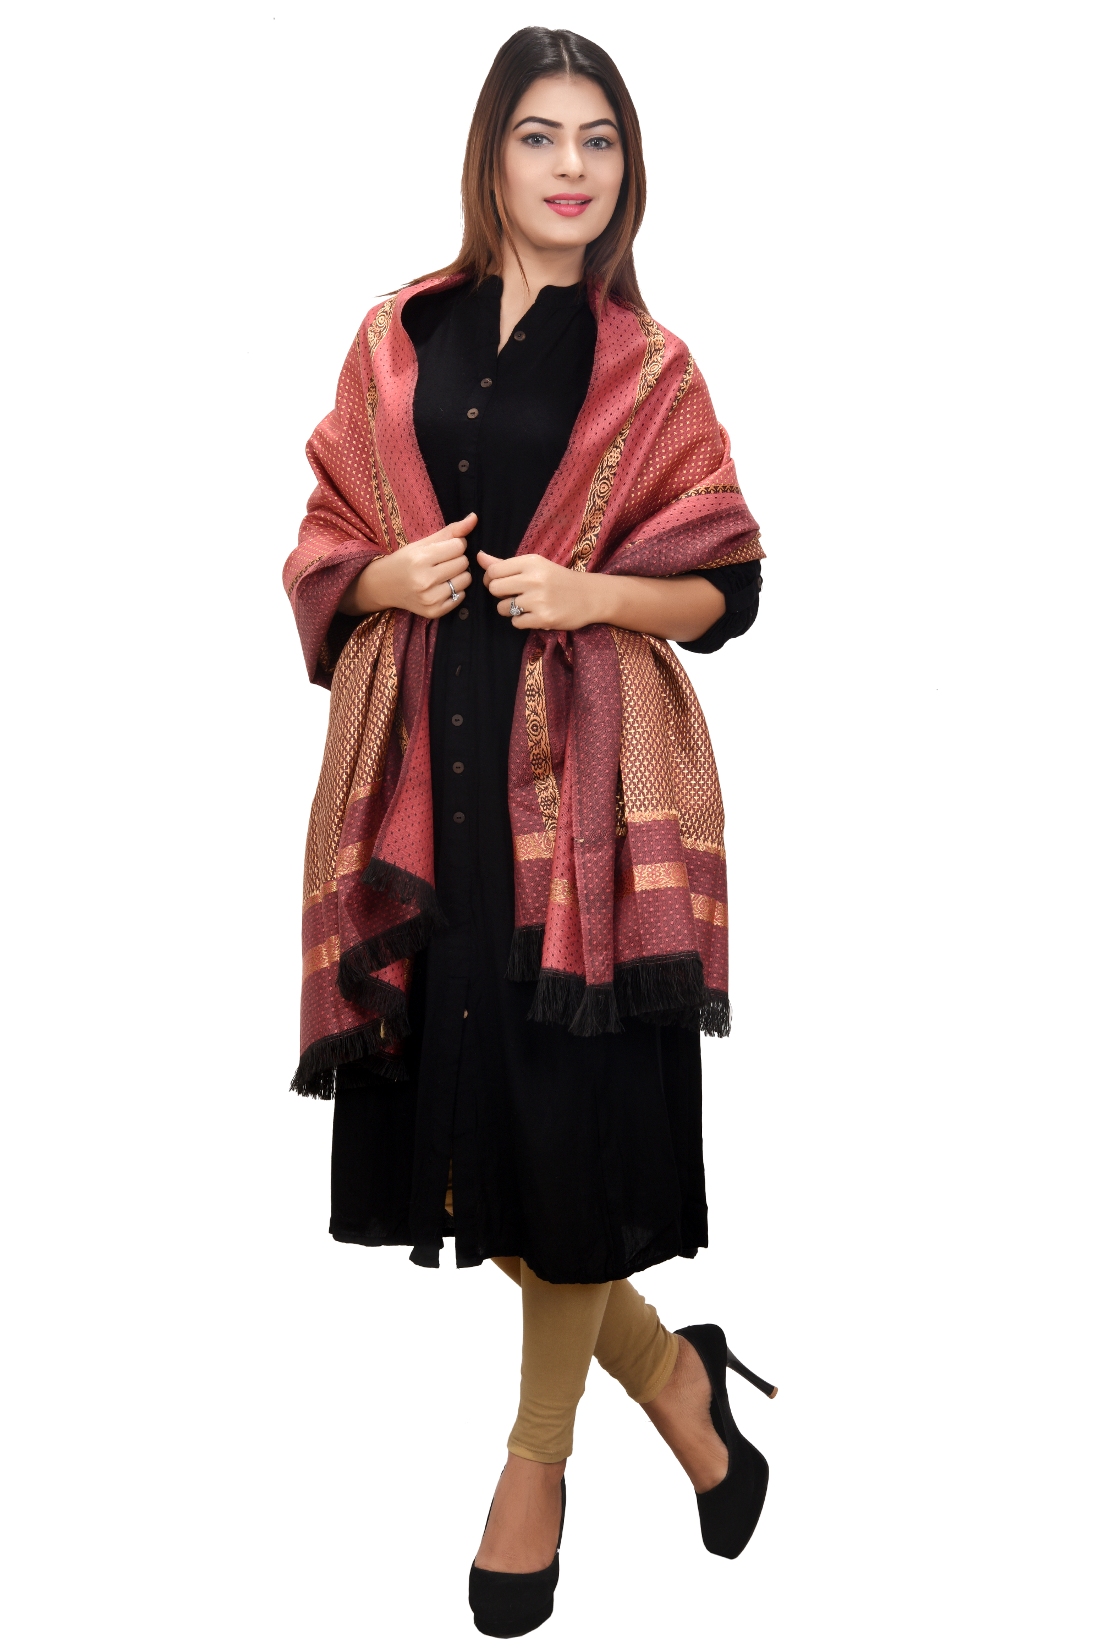 Buy Womens Woolen Shawl Online @ ₹799 from ShopClues